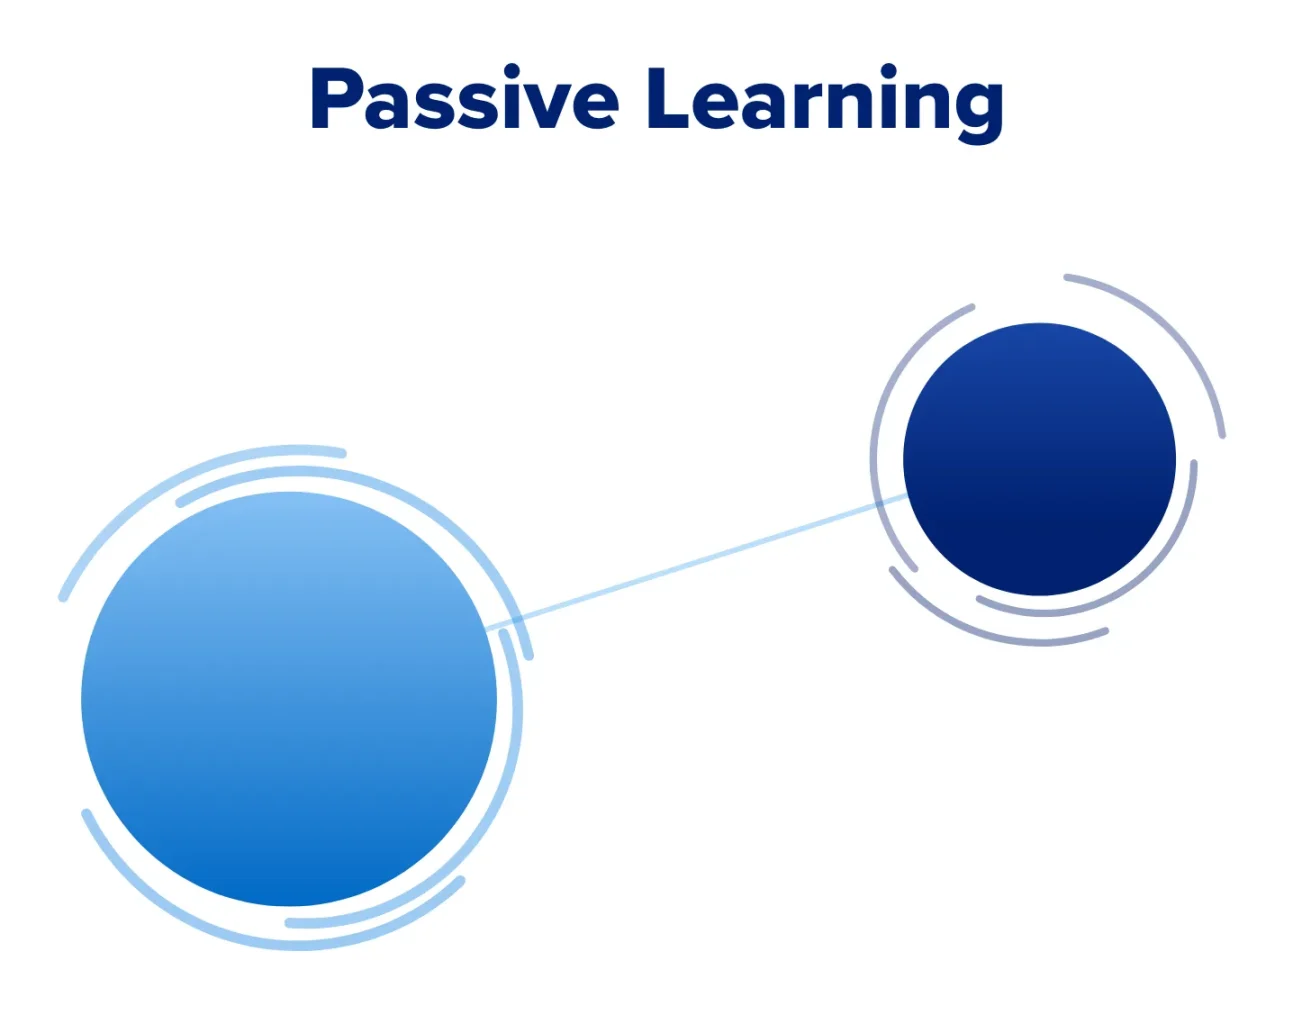 Passive learning model